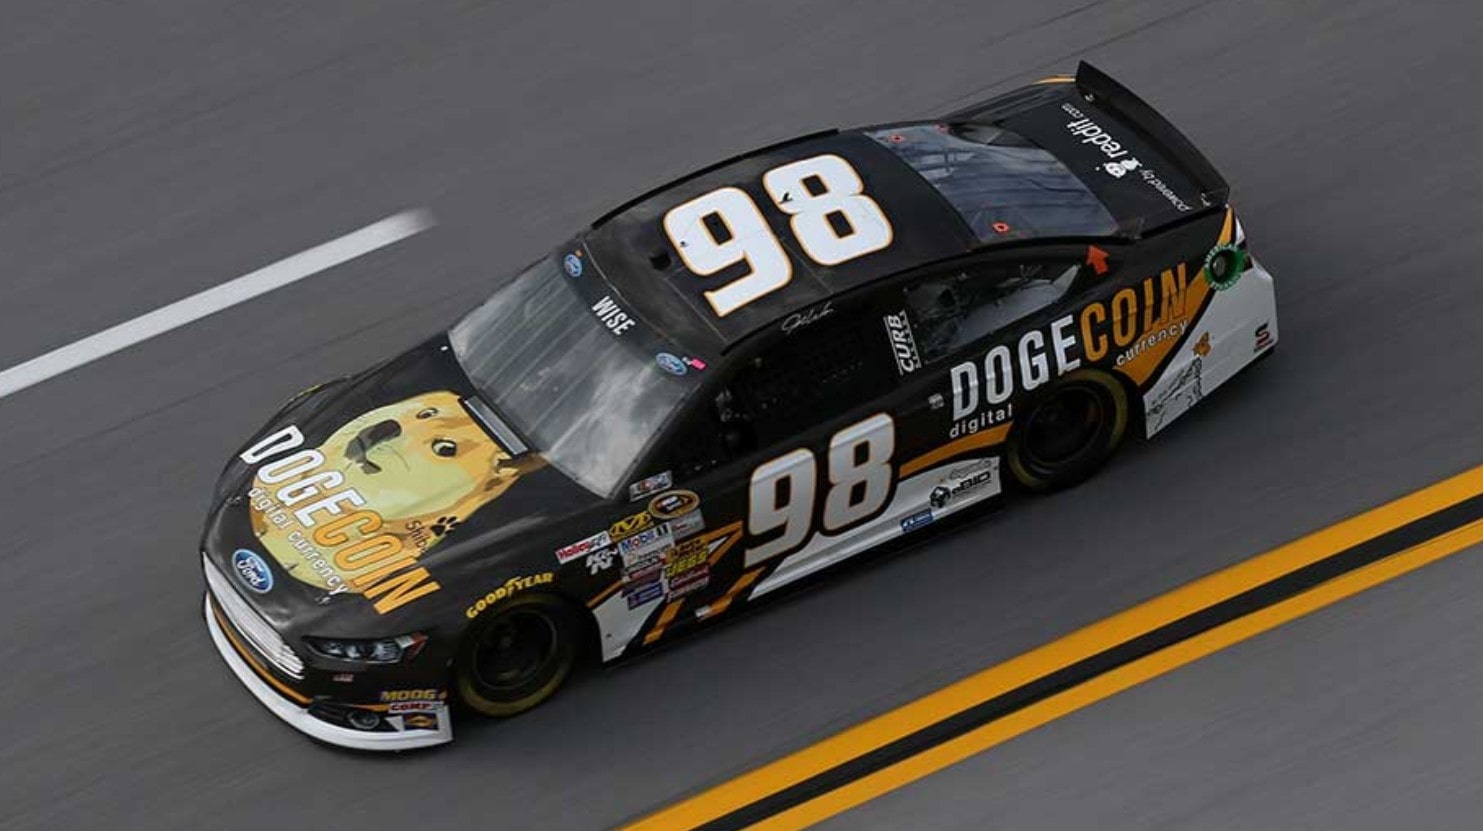 Bitcoin Now Racing On NASCAR: Top Driver Adopts The Logo